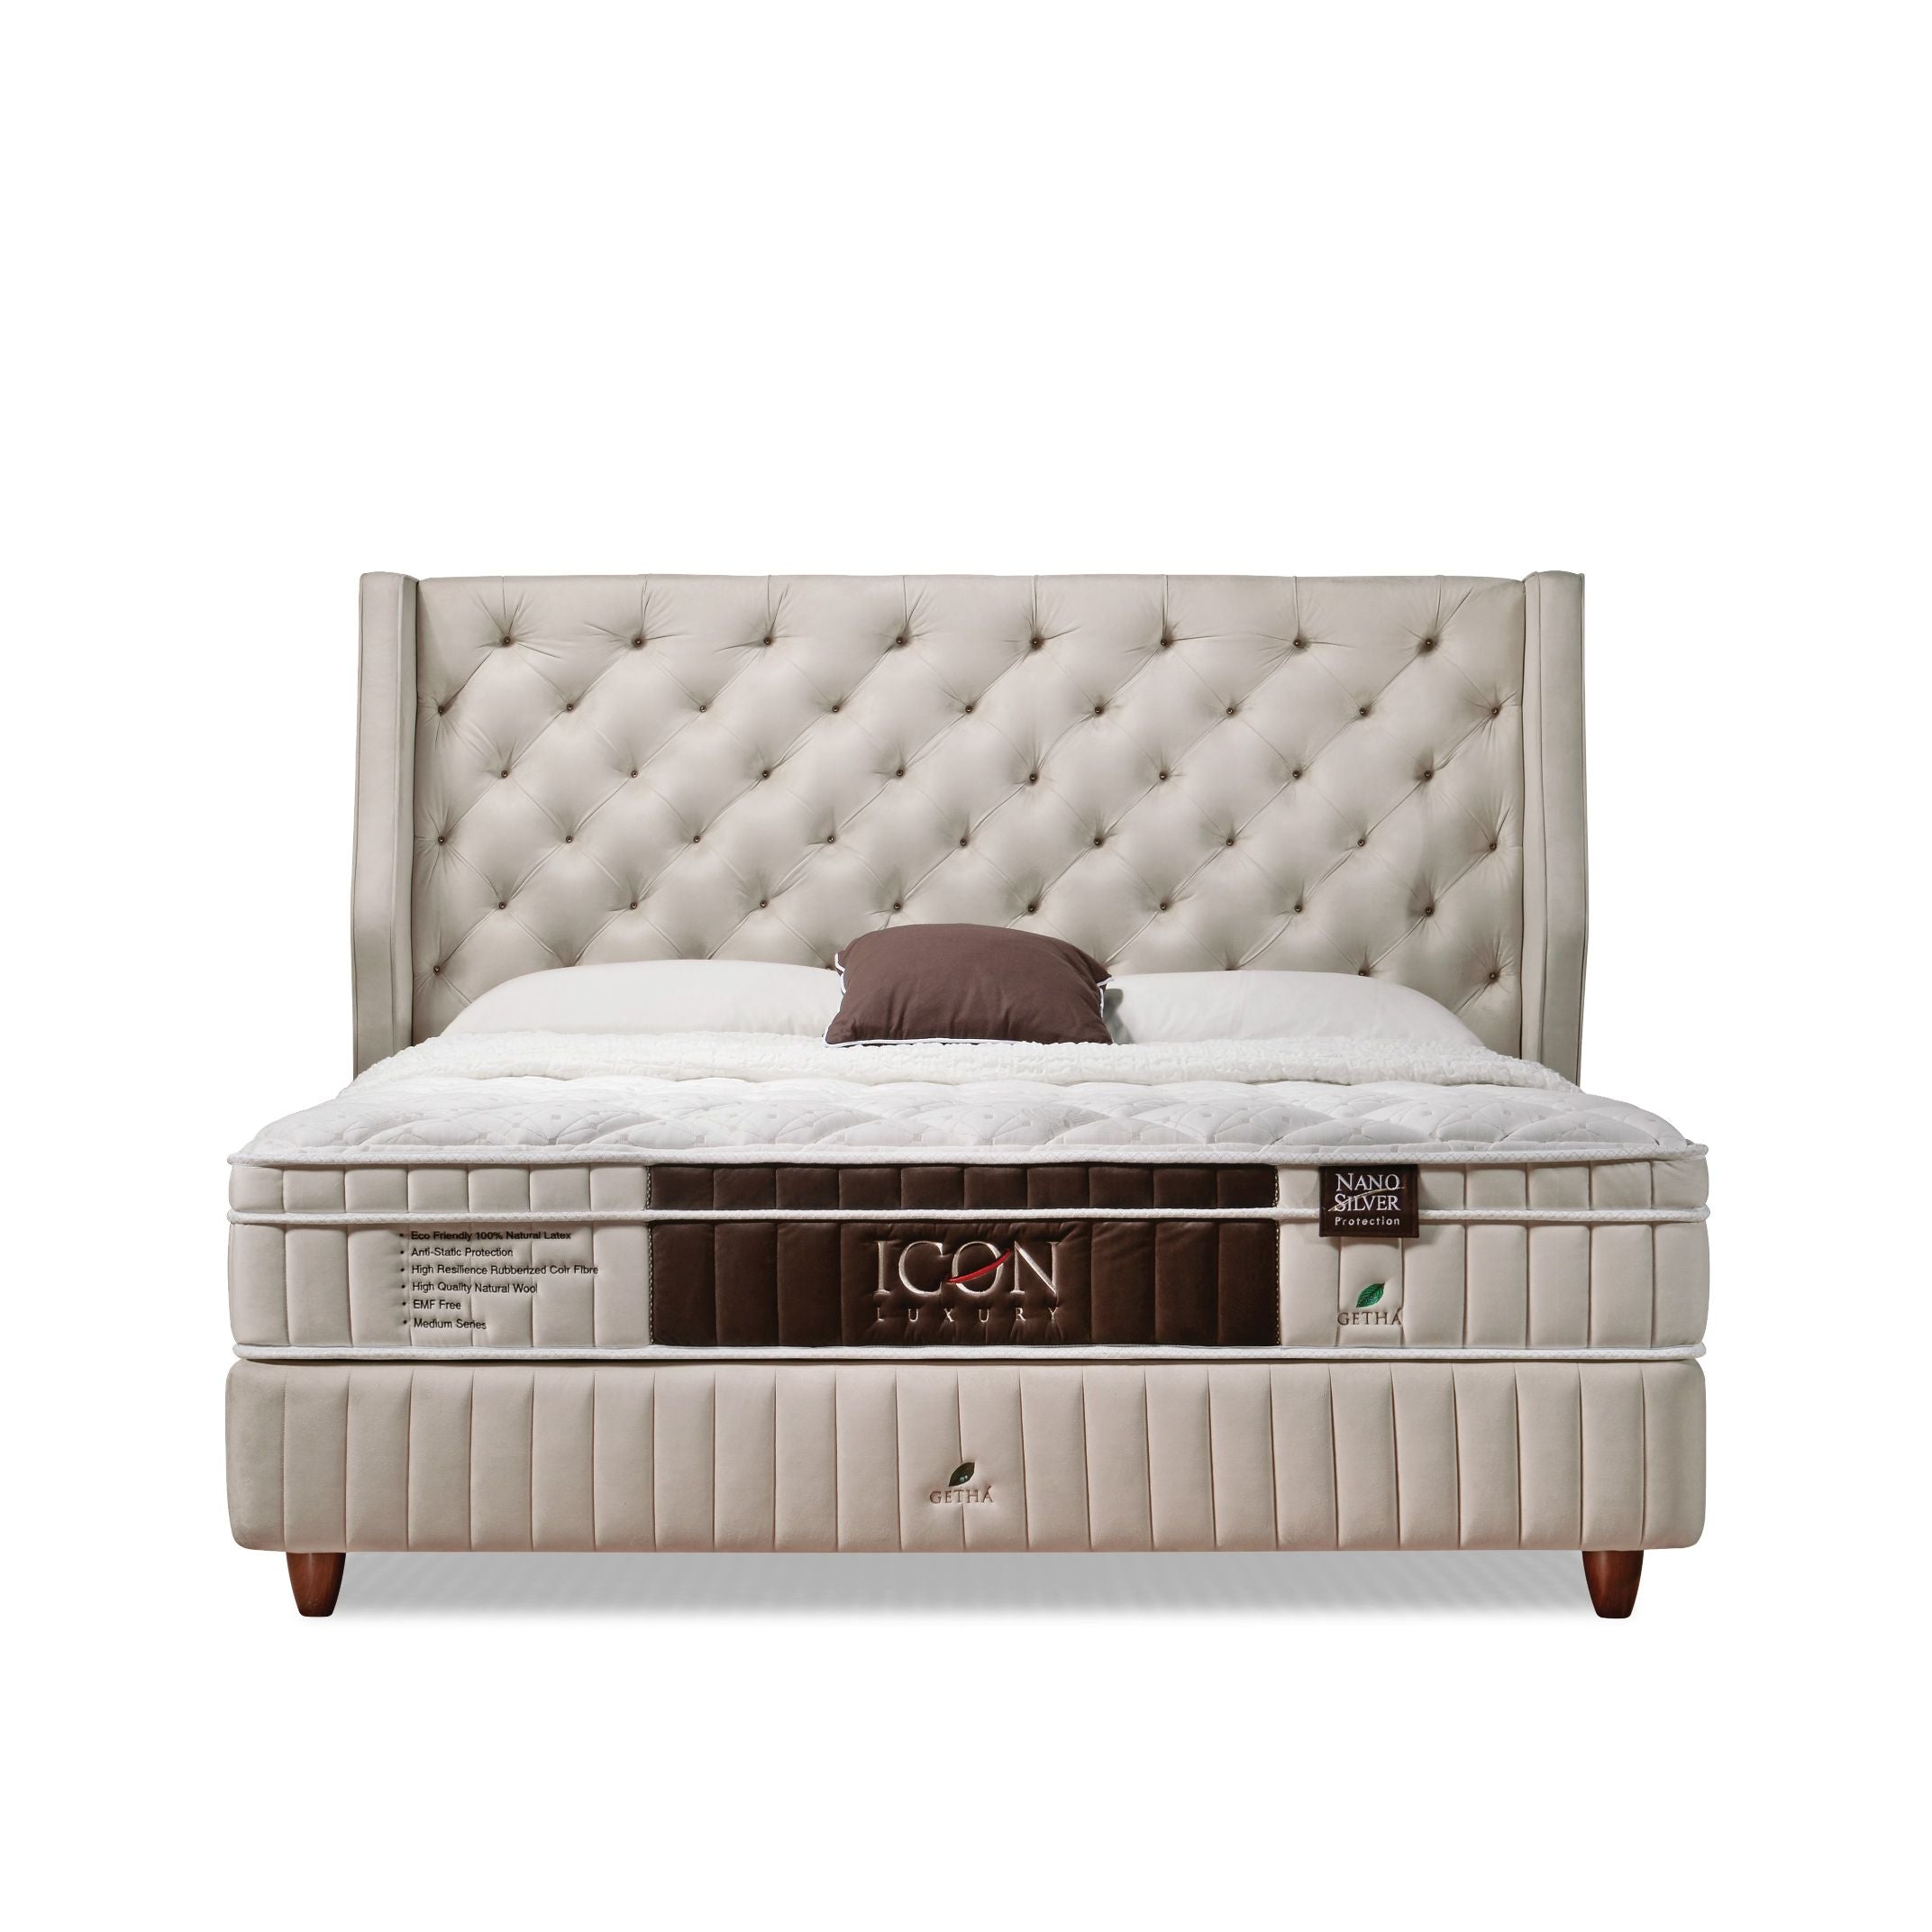 ICON Luxury Sleeping Mattress